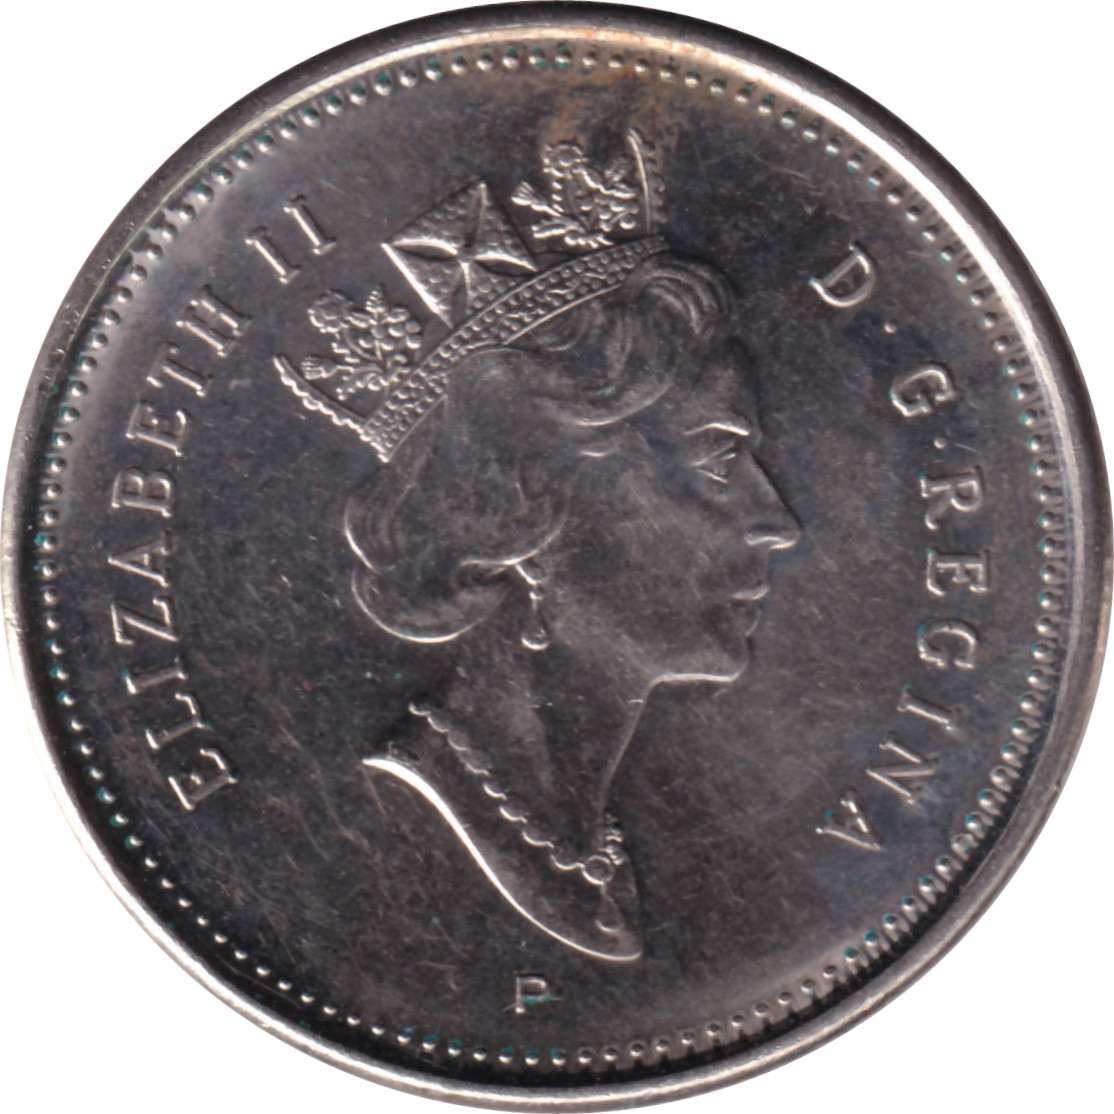 25 cents - Elizabeth II - Mature head